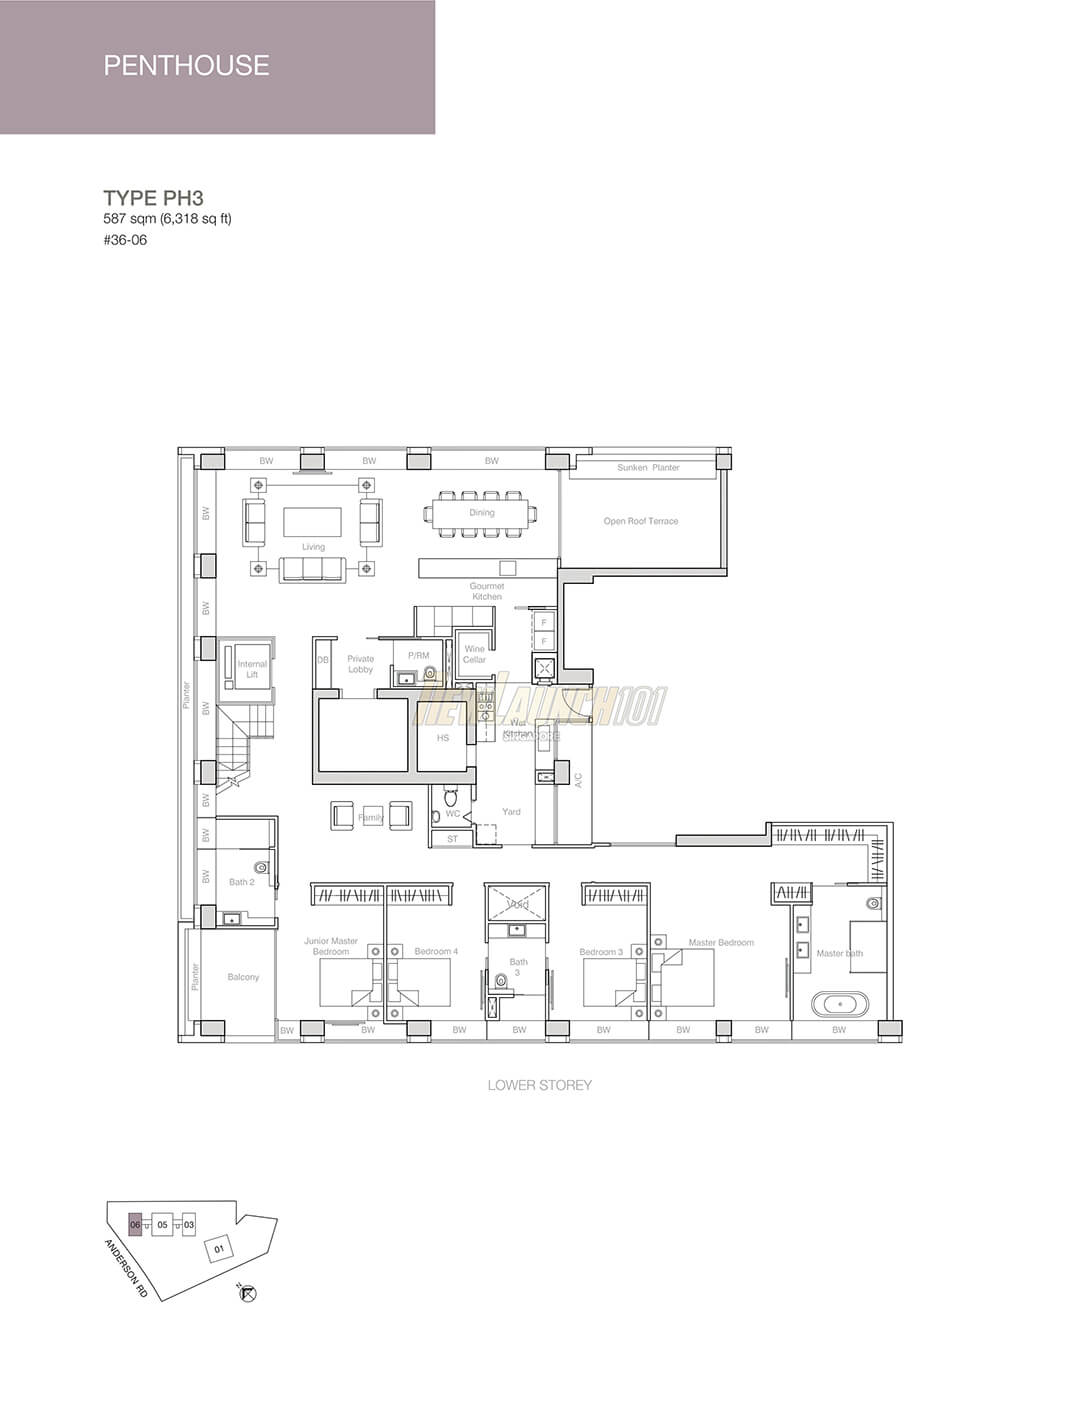 Nouvel 18 Floor Plan Penthouse Type PH3 Lower